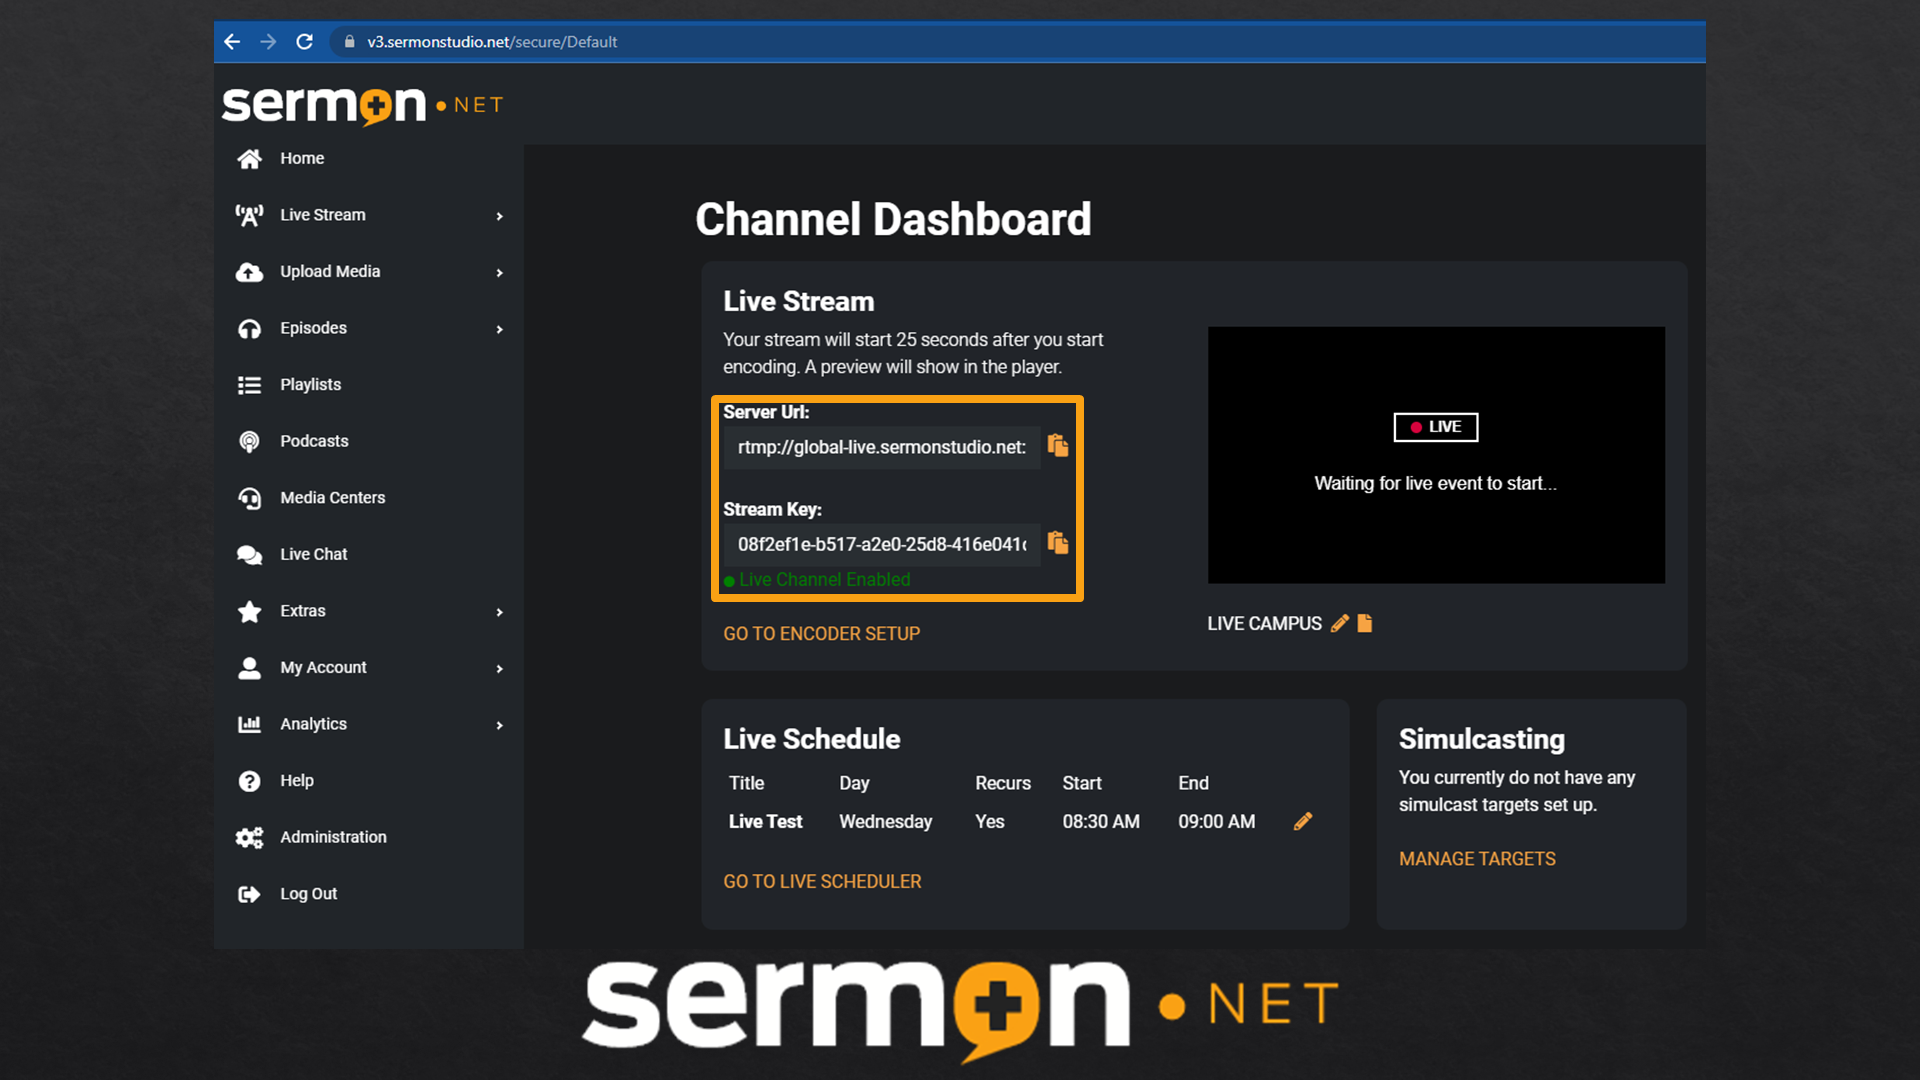 sermon.net live stream credentials